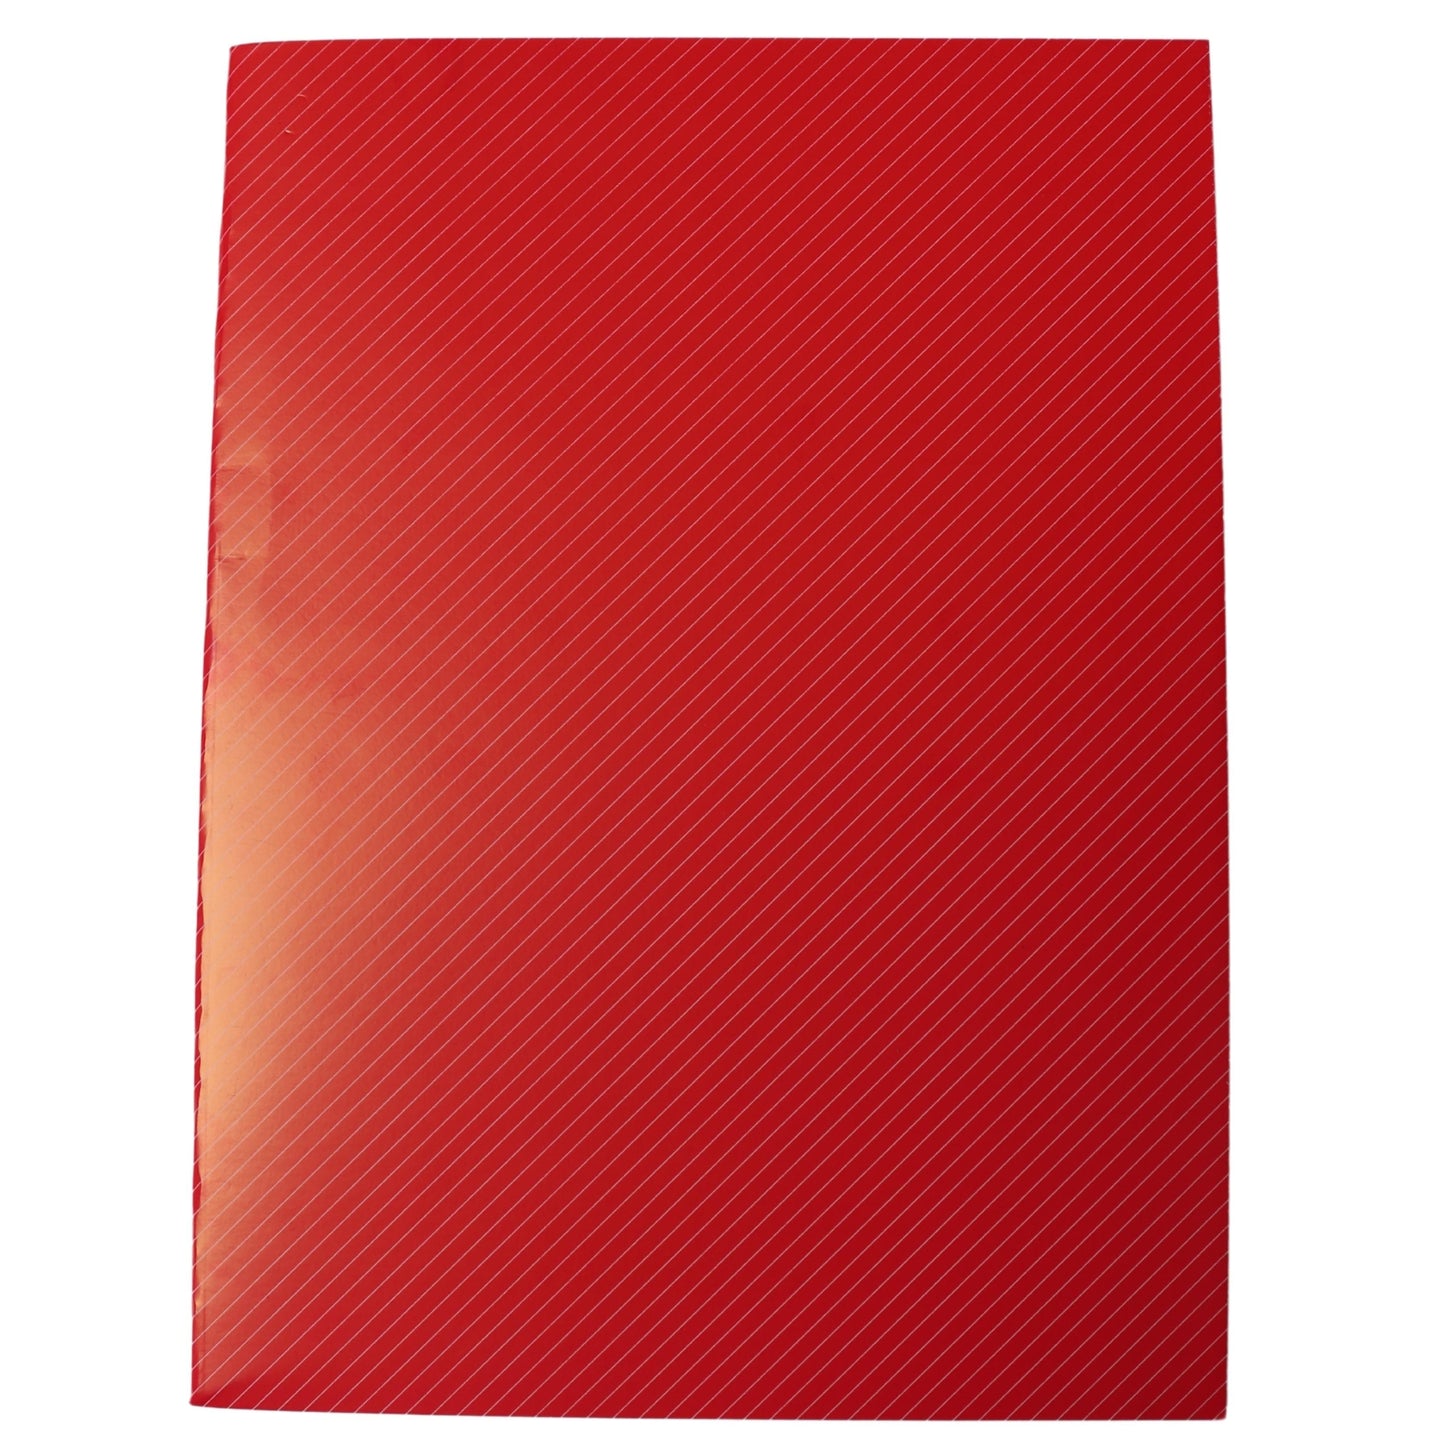 MATNI GROUP School Bags & Supplies Red MATNI GROUP -  University CopyBook 48 Sheets